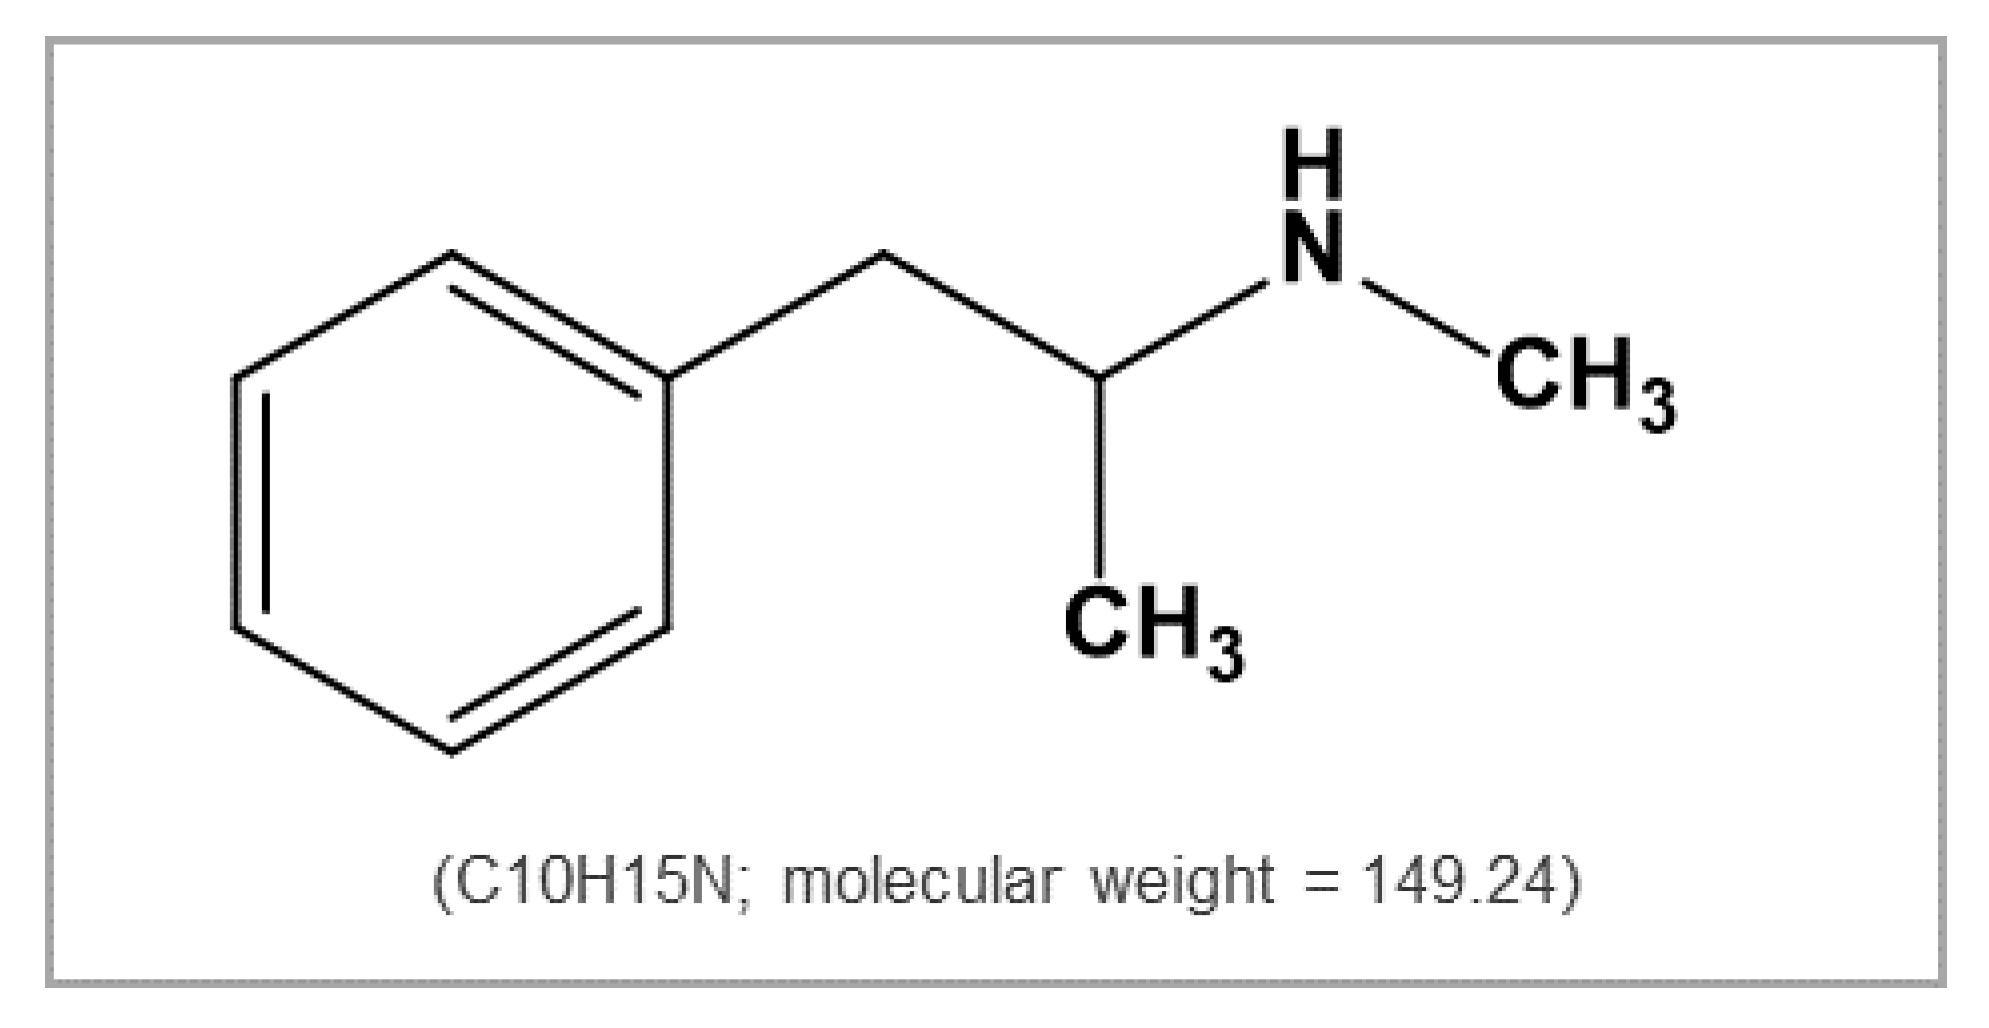 methamphetamine structure